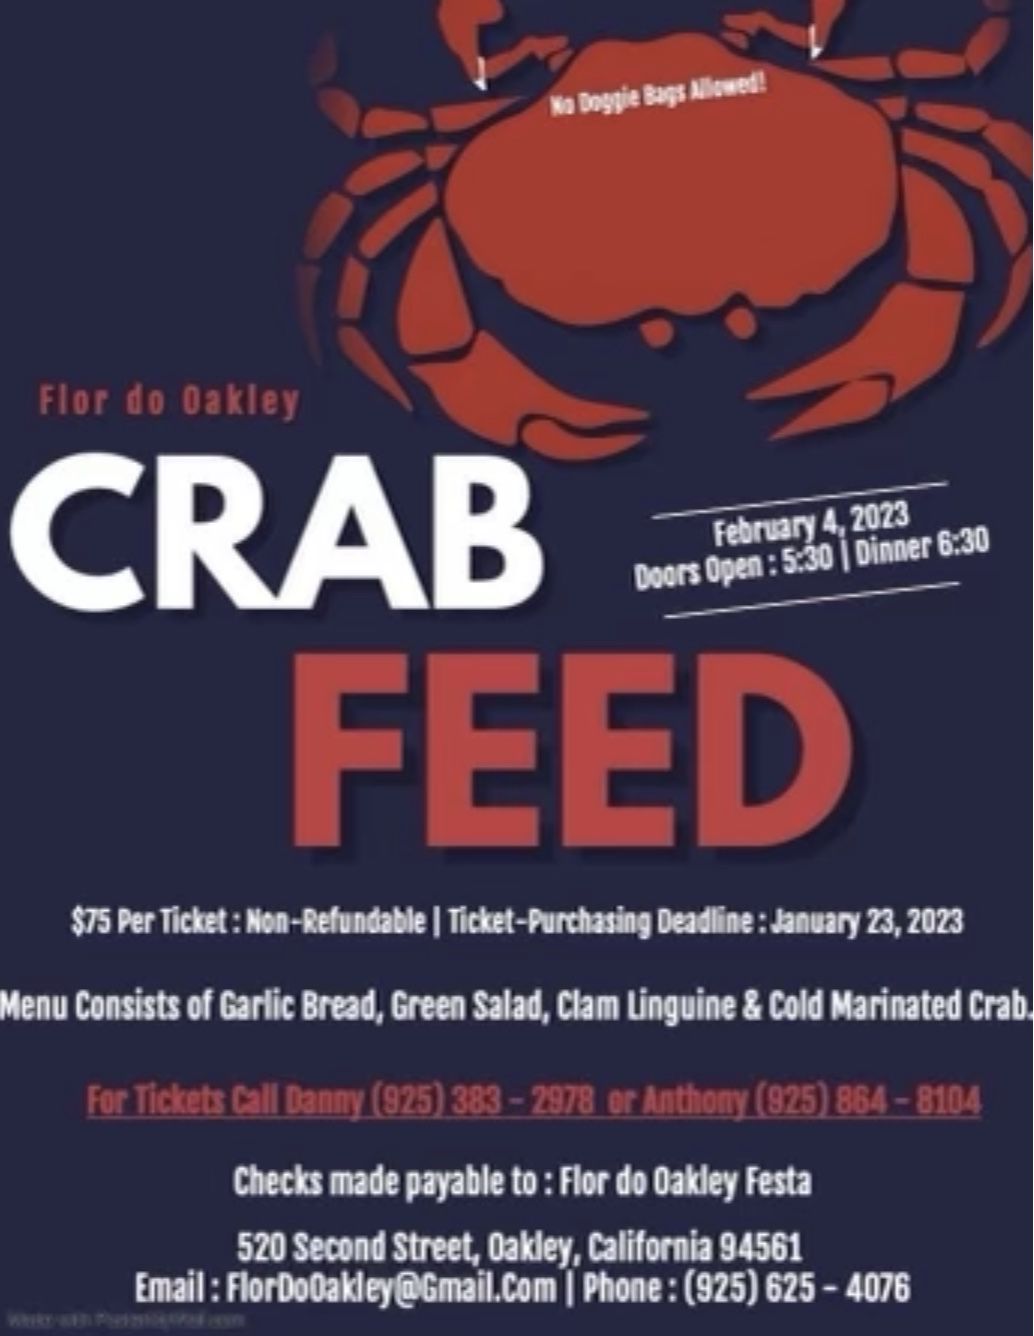 Crab Feed ticket tonight 2/4 Oakley ca $75